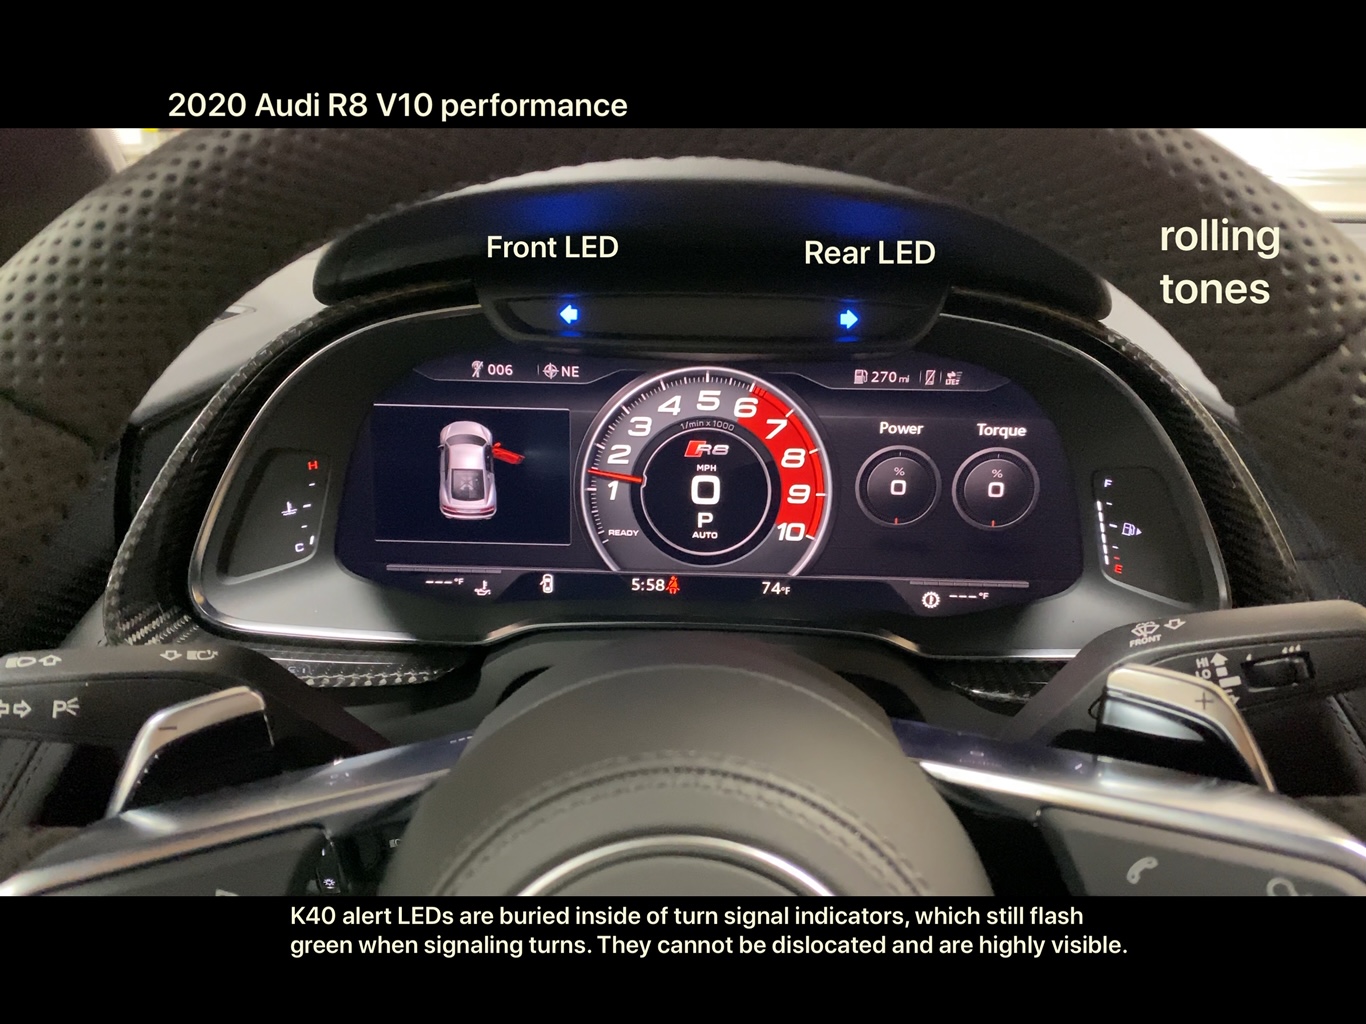 K40 radar detector alert led's on 2020 Audi R8